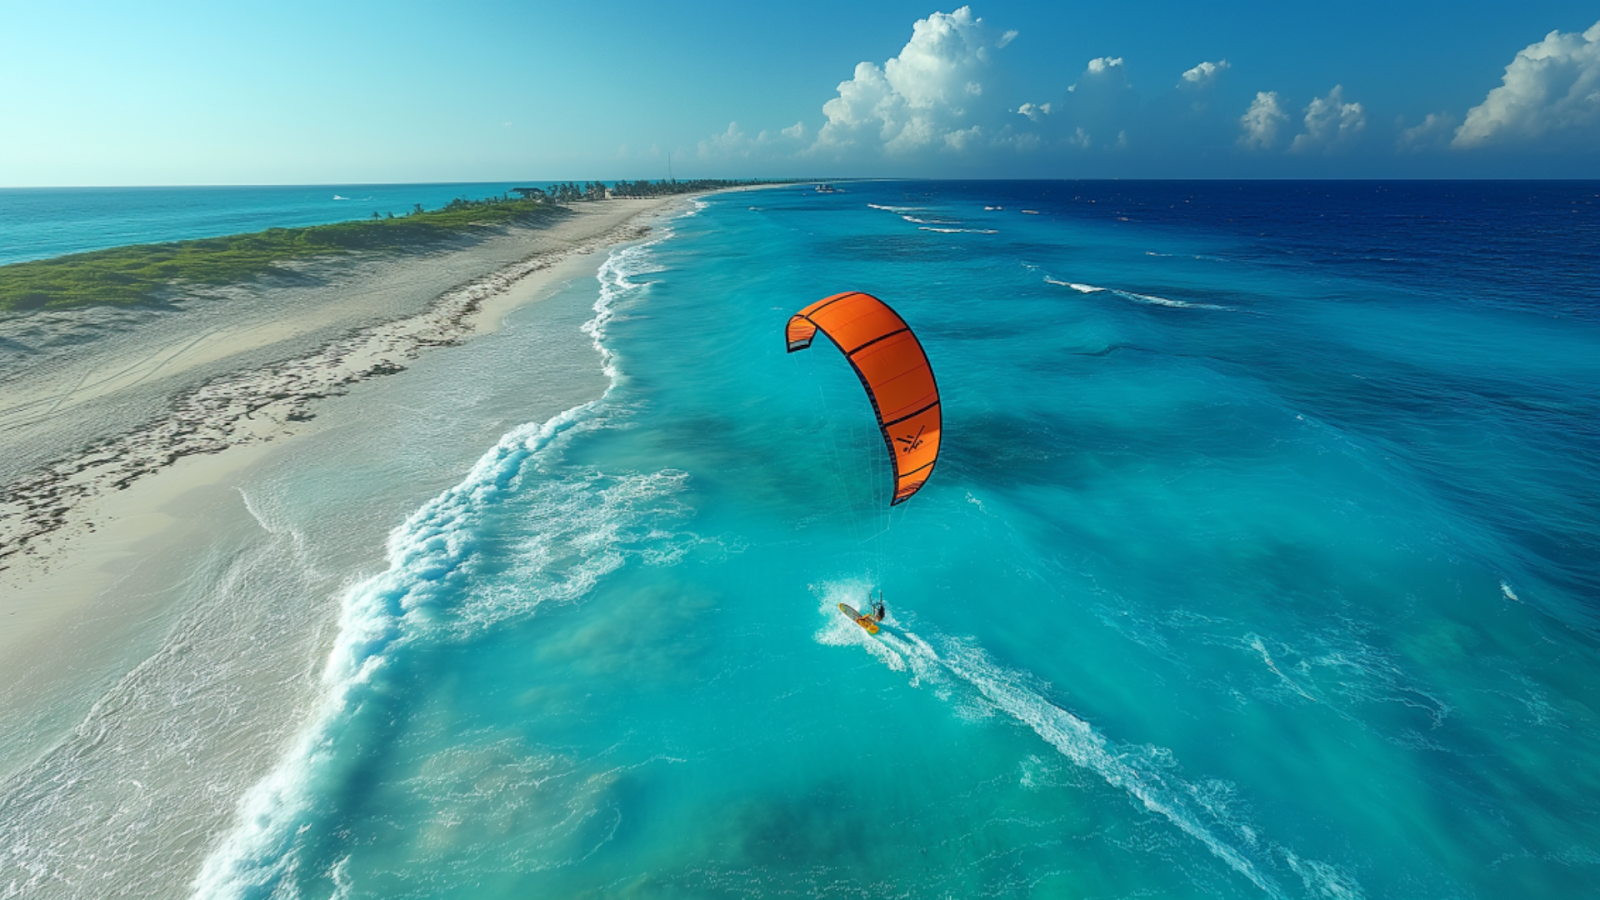 An adventurer kite surfing on the breezy waters of the Caribbean Sea near Playa del Carmen.